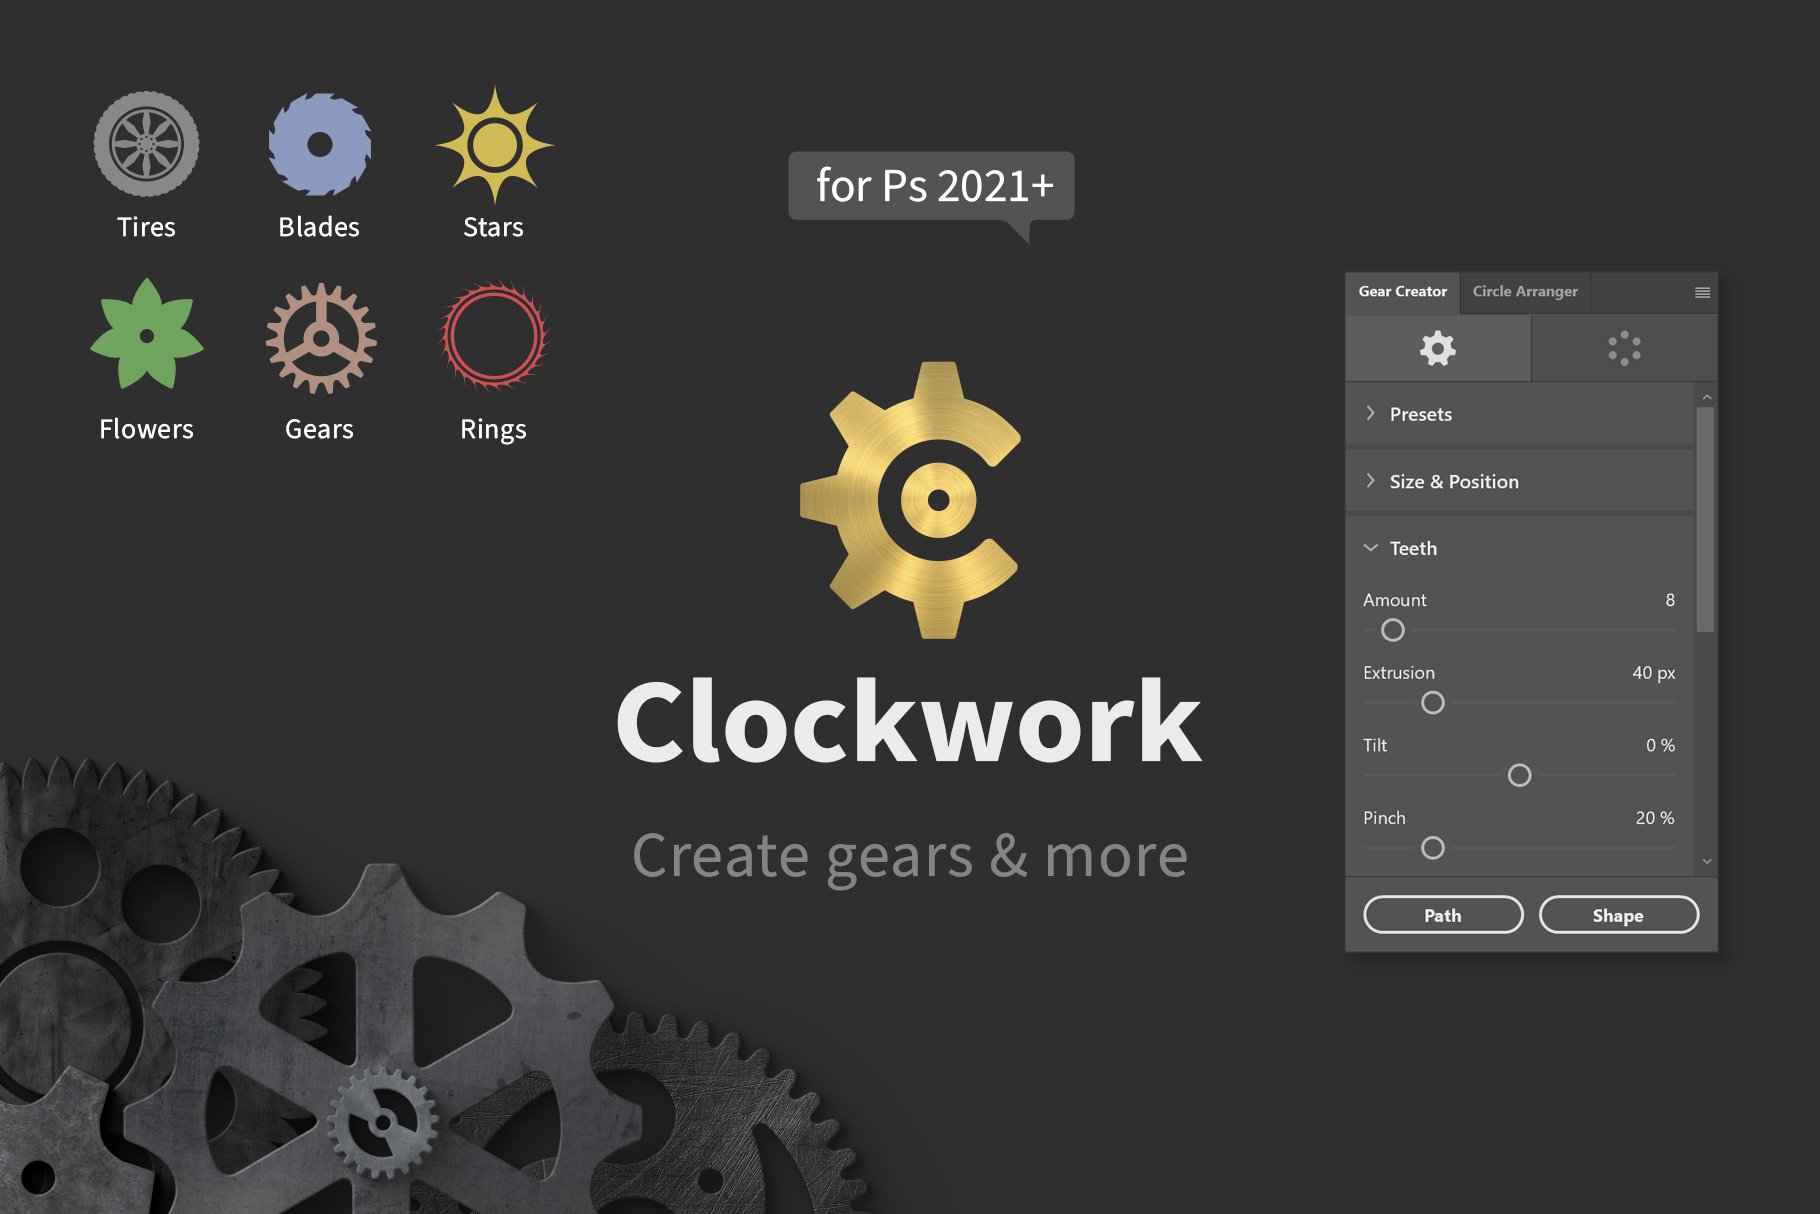 Clockwork - Create Gears & Morecover image.